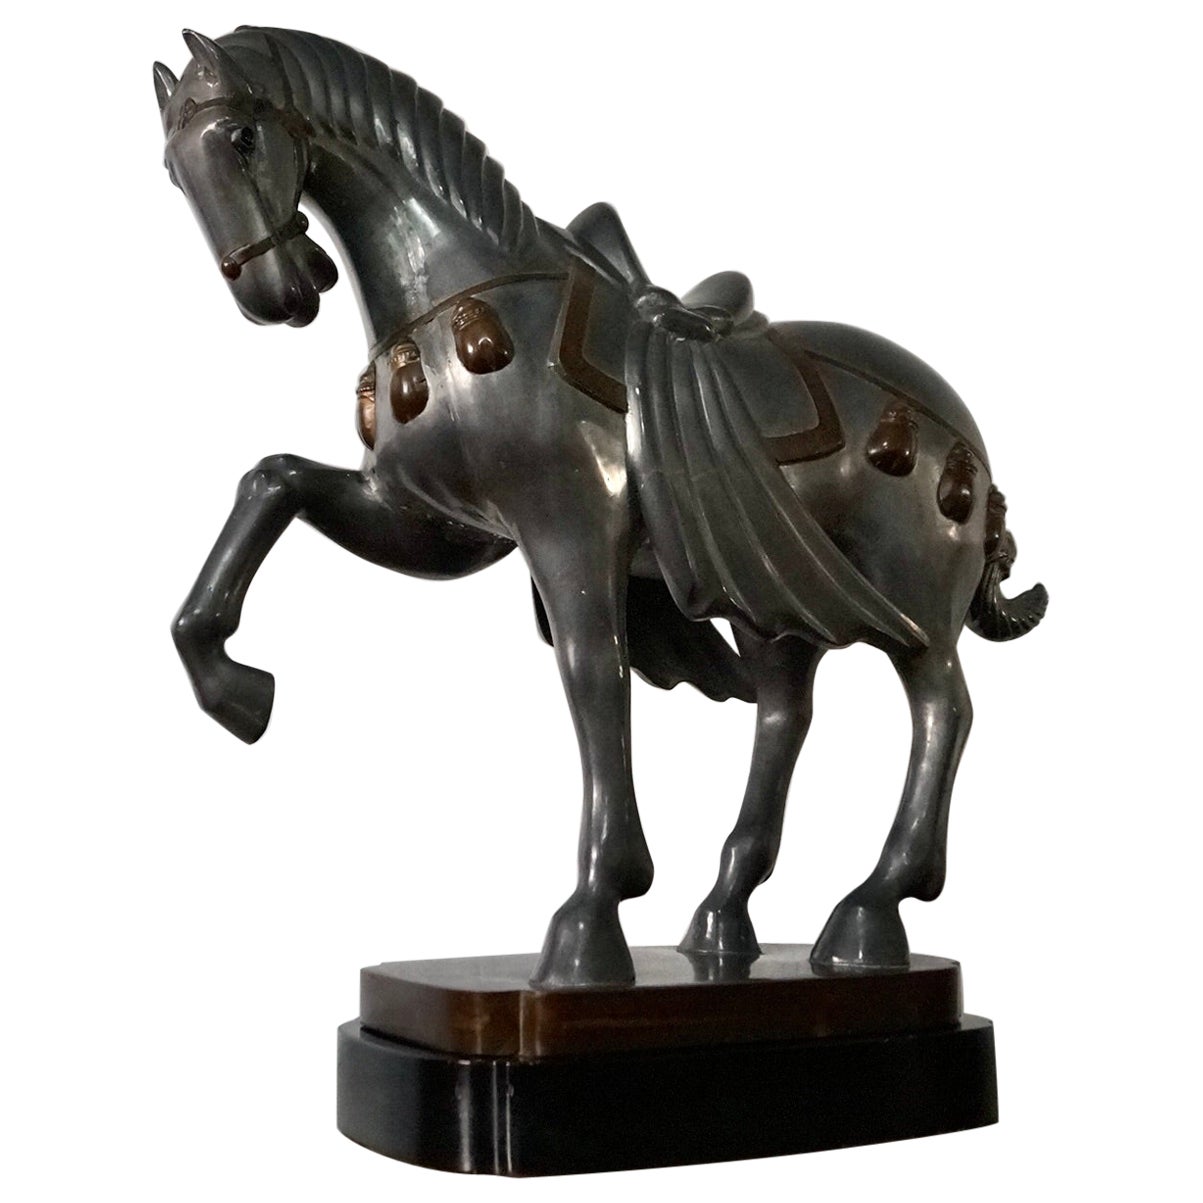 1940's Art Deco Pewter Horse Statue Sculpture